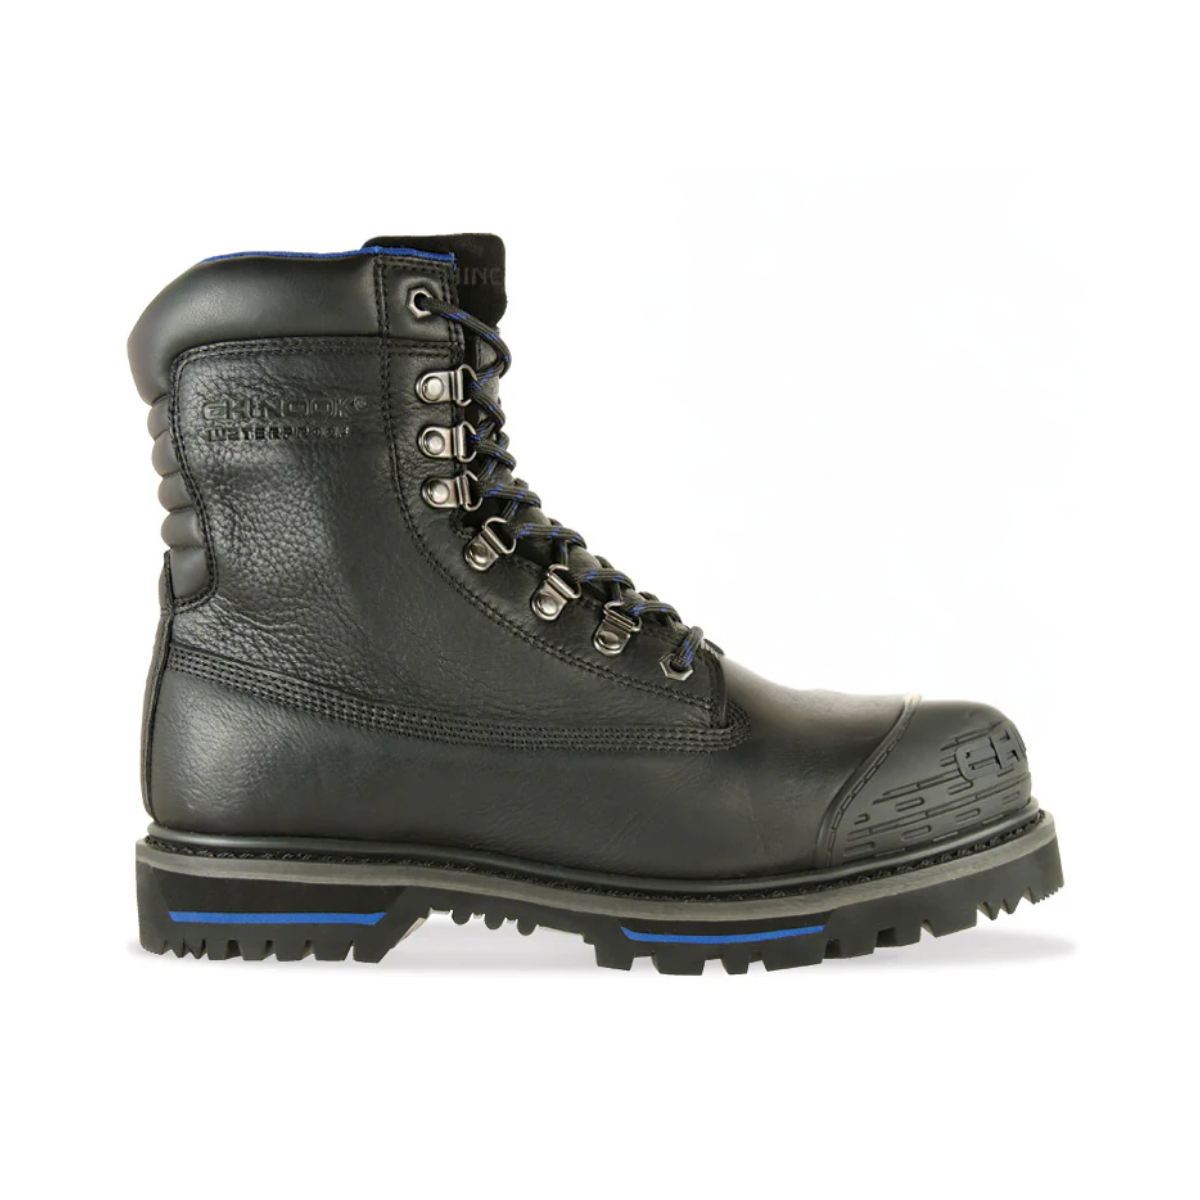 Tarantula 8" Steel Toe Men’s Waterproof Work Boot - Black